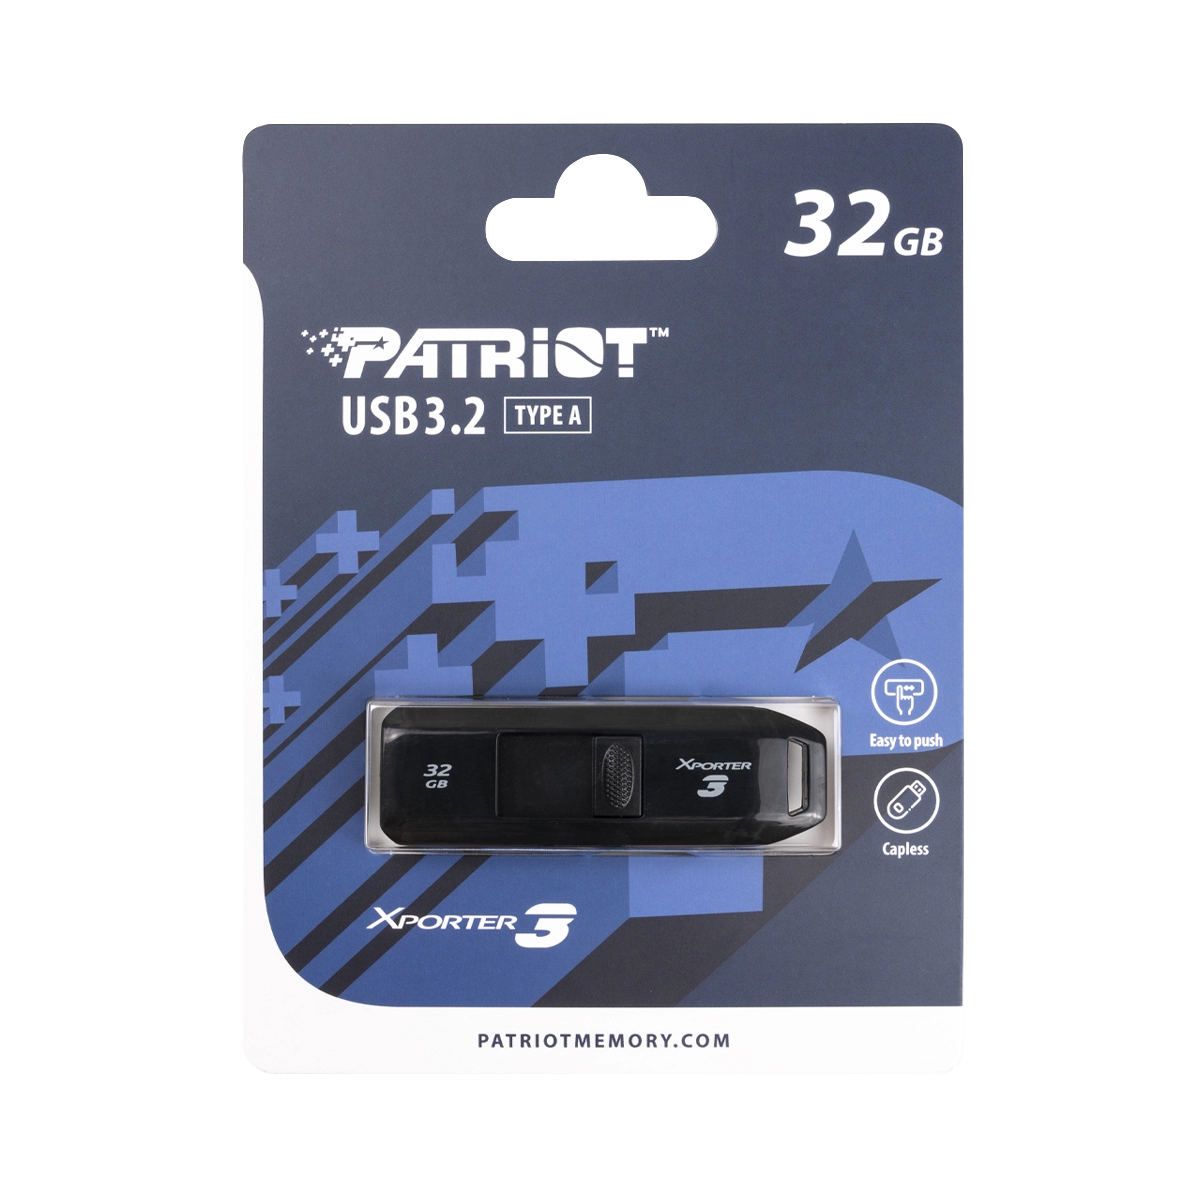 USB Flash Drive Patriot Xporter 3, Black / USB3.2 / 32GB